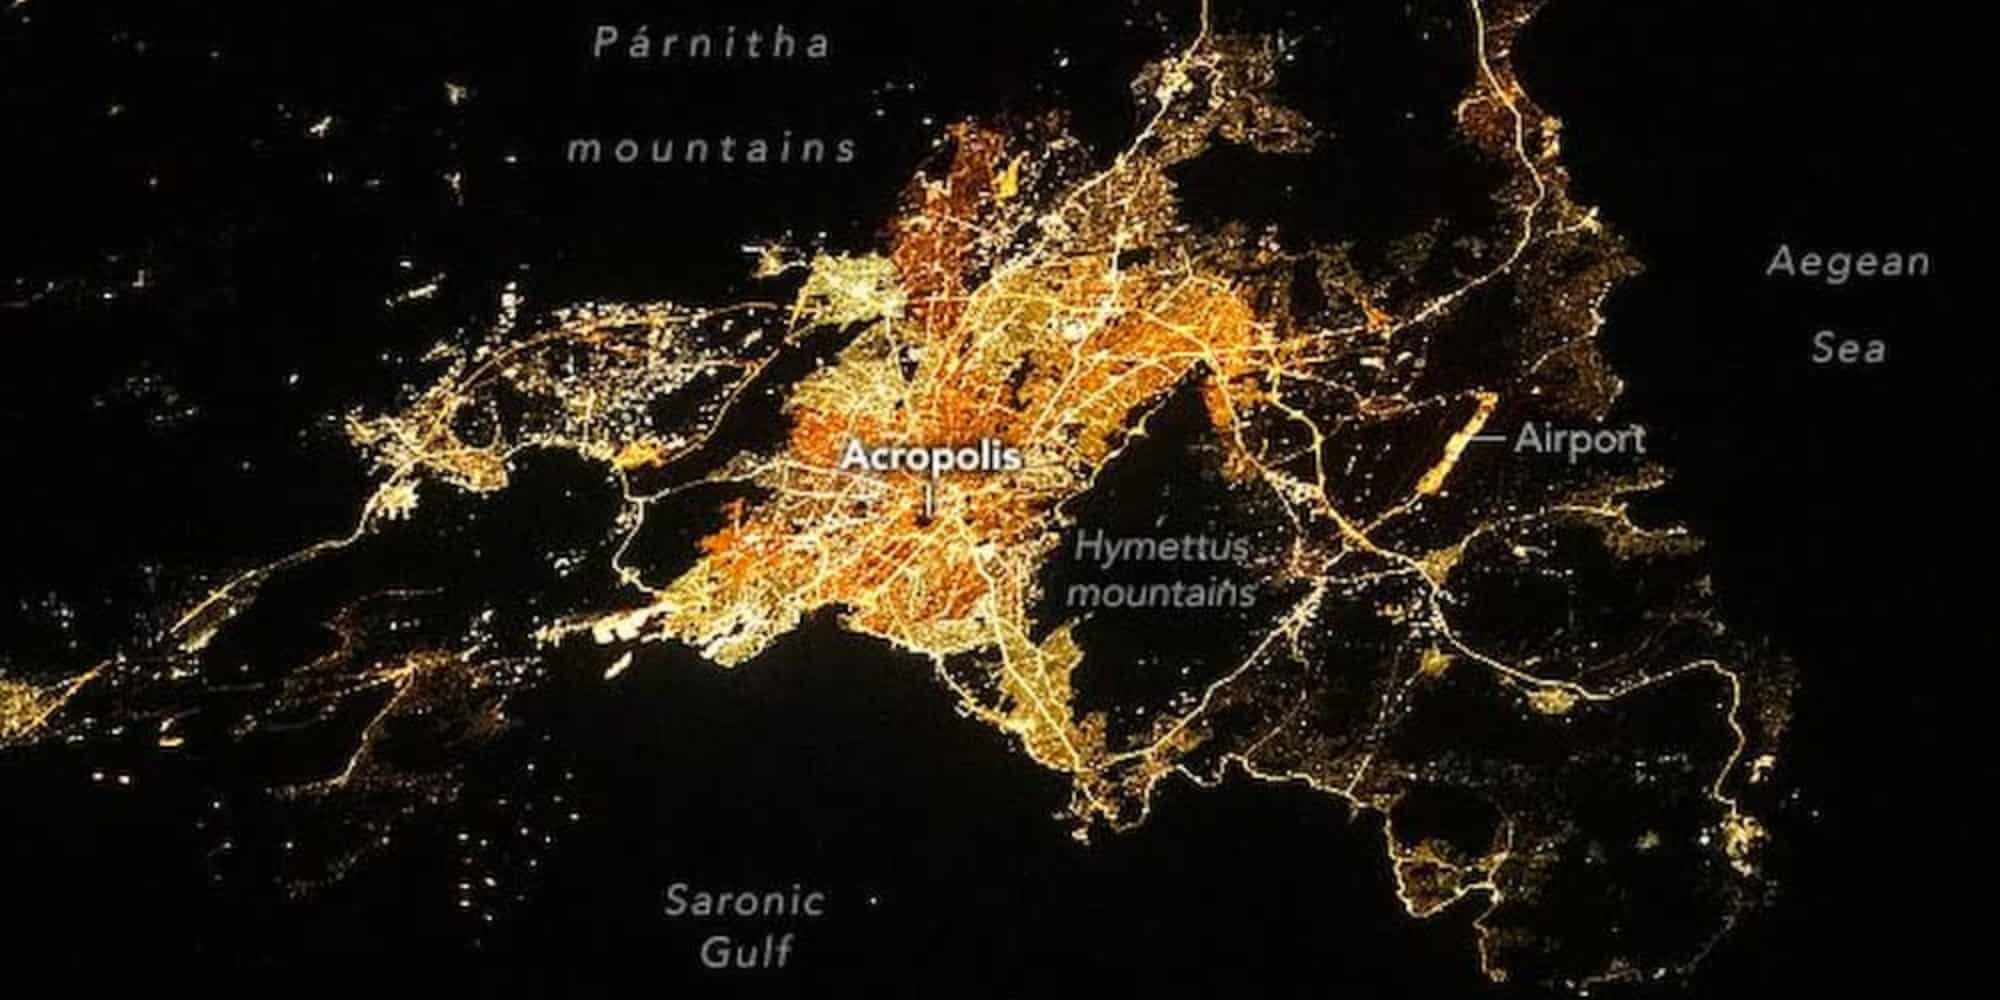 nasa athina 12 12 23 - Η νυχτερινή Αθήνα από το διάστημα – Η εντυπωσιακή φωτογραφία ενός αστροναύτη της NASA (εικόνα)